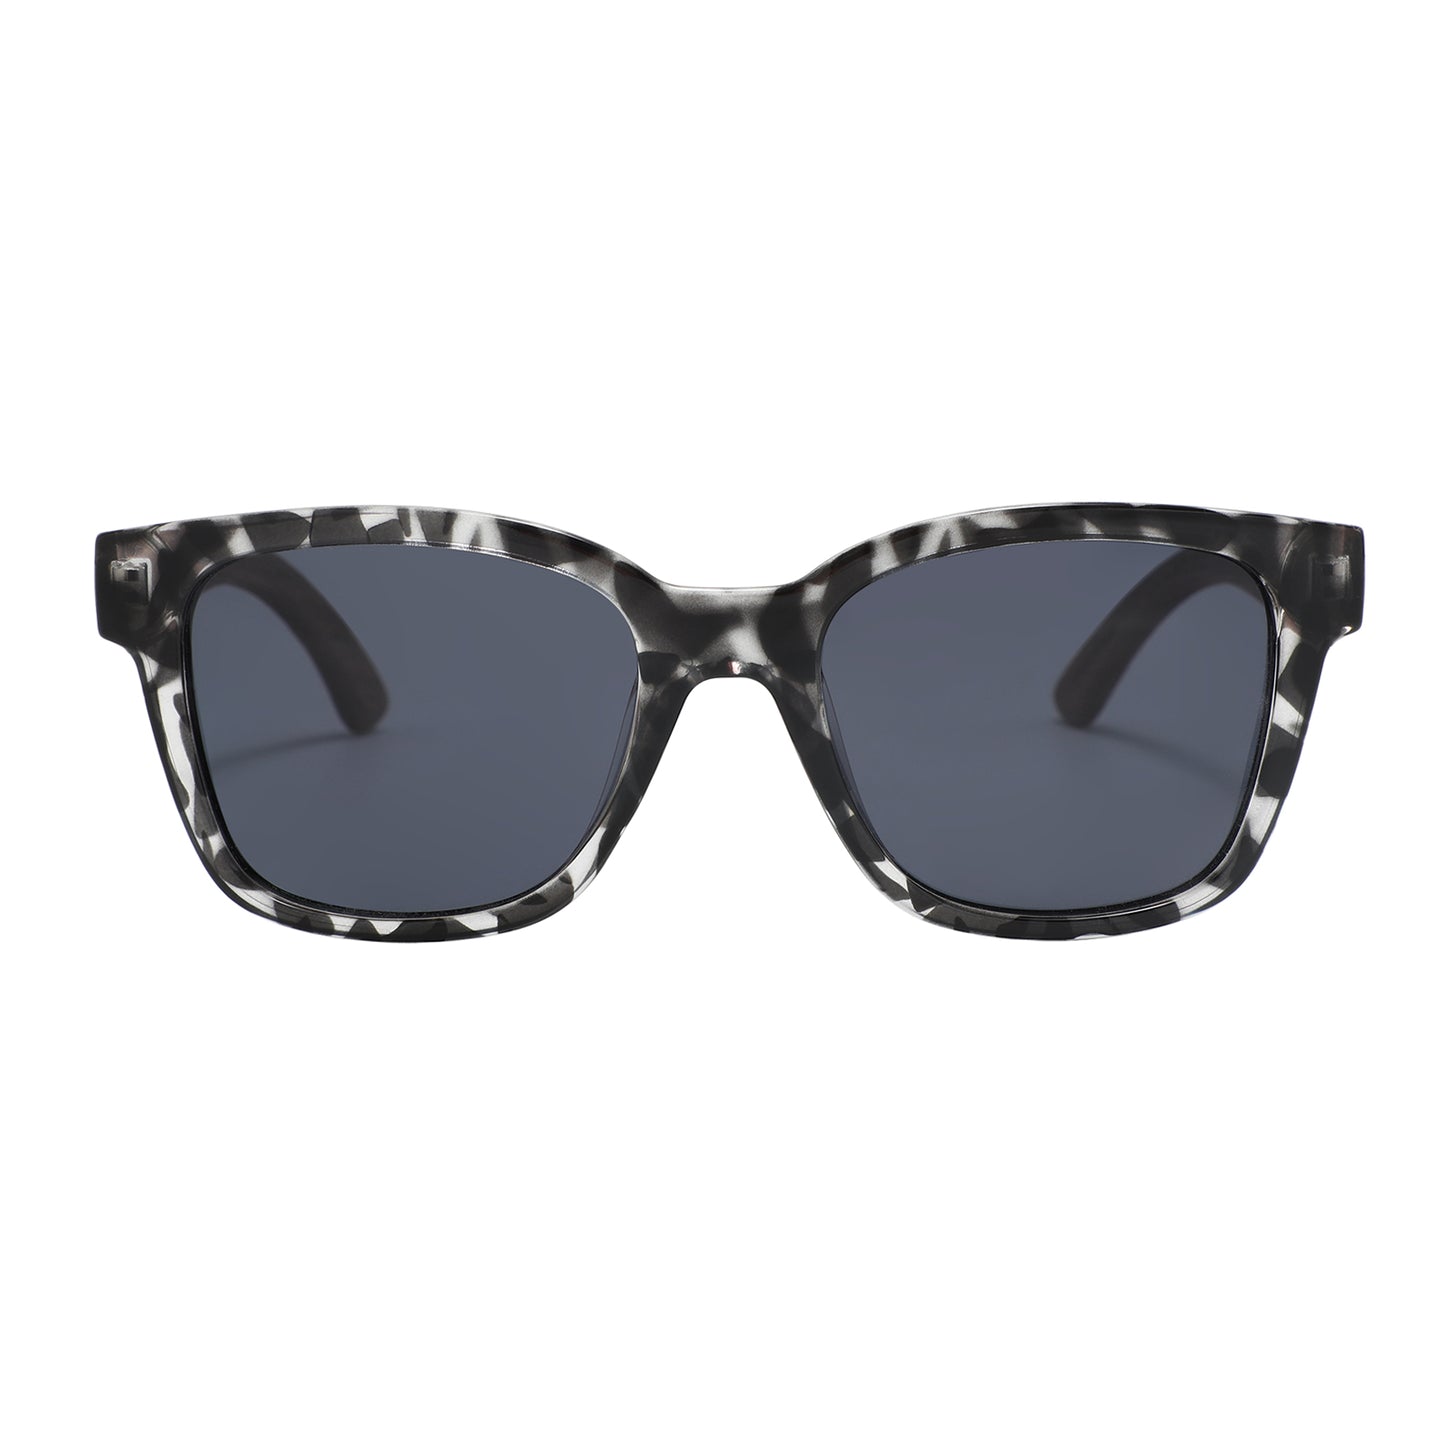 LEAH T/S BLACK Ladies Sunglasses Polarised Lens Wooden Arms